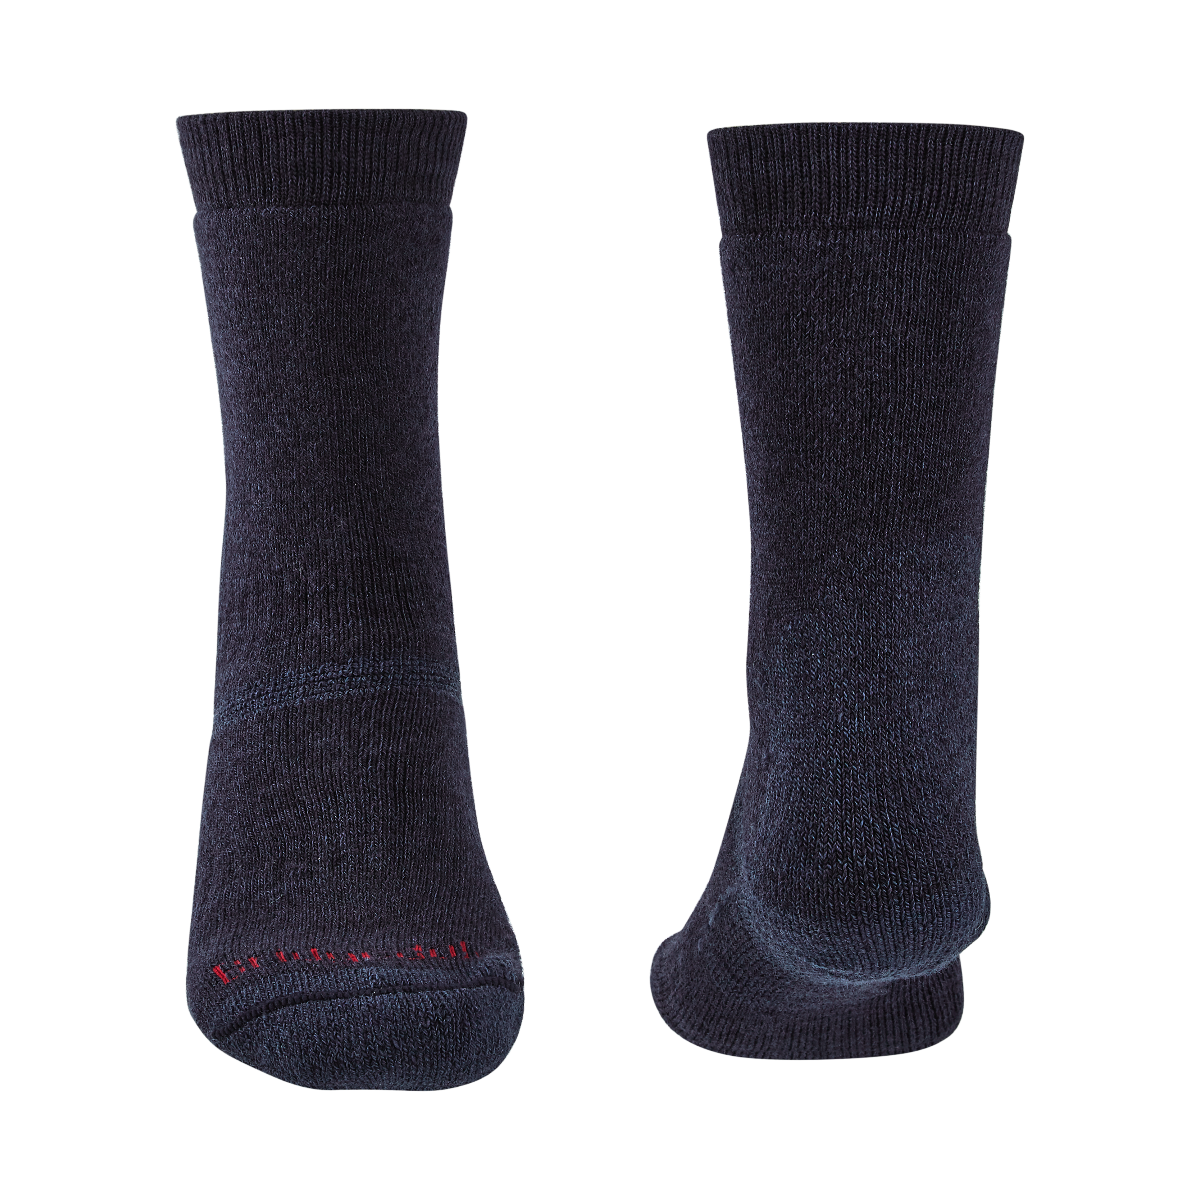 Bridgedale Explorer Heavyweight Merino Endurance Boot Socks